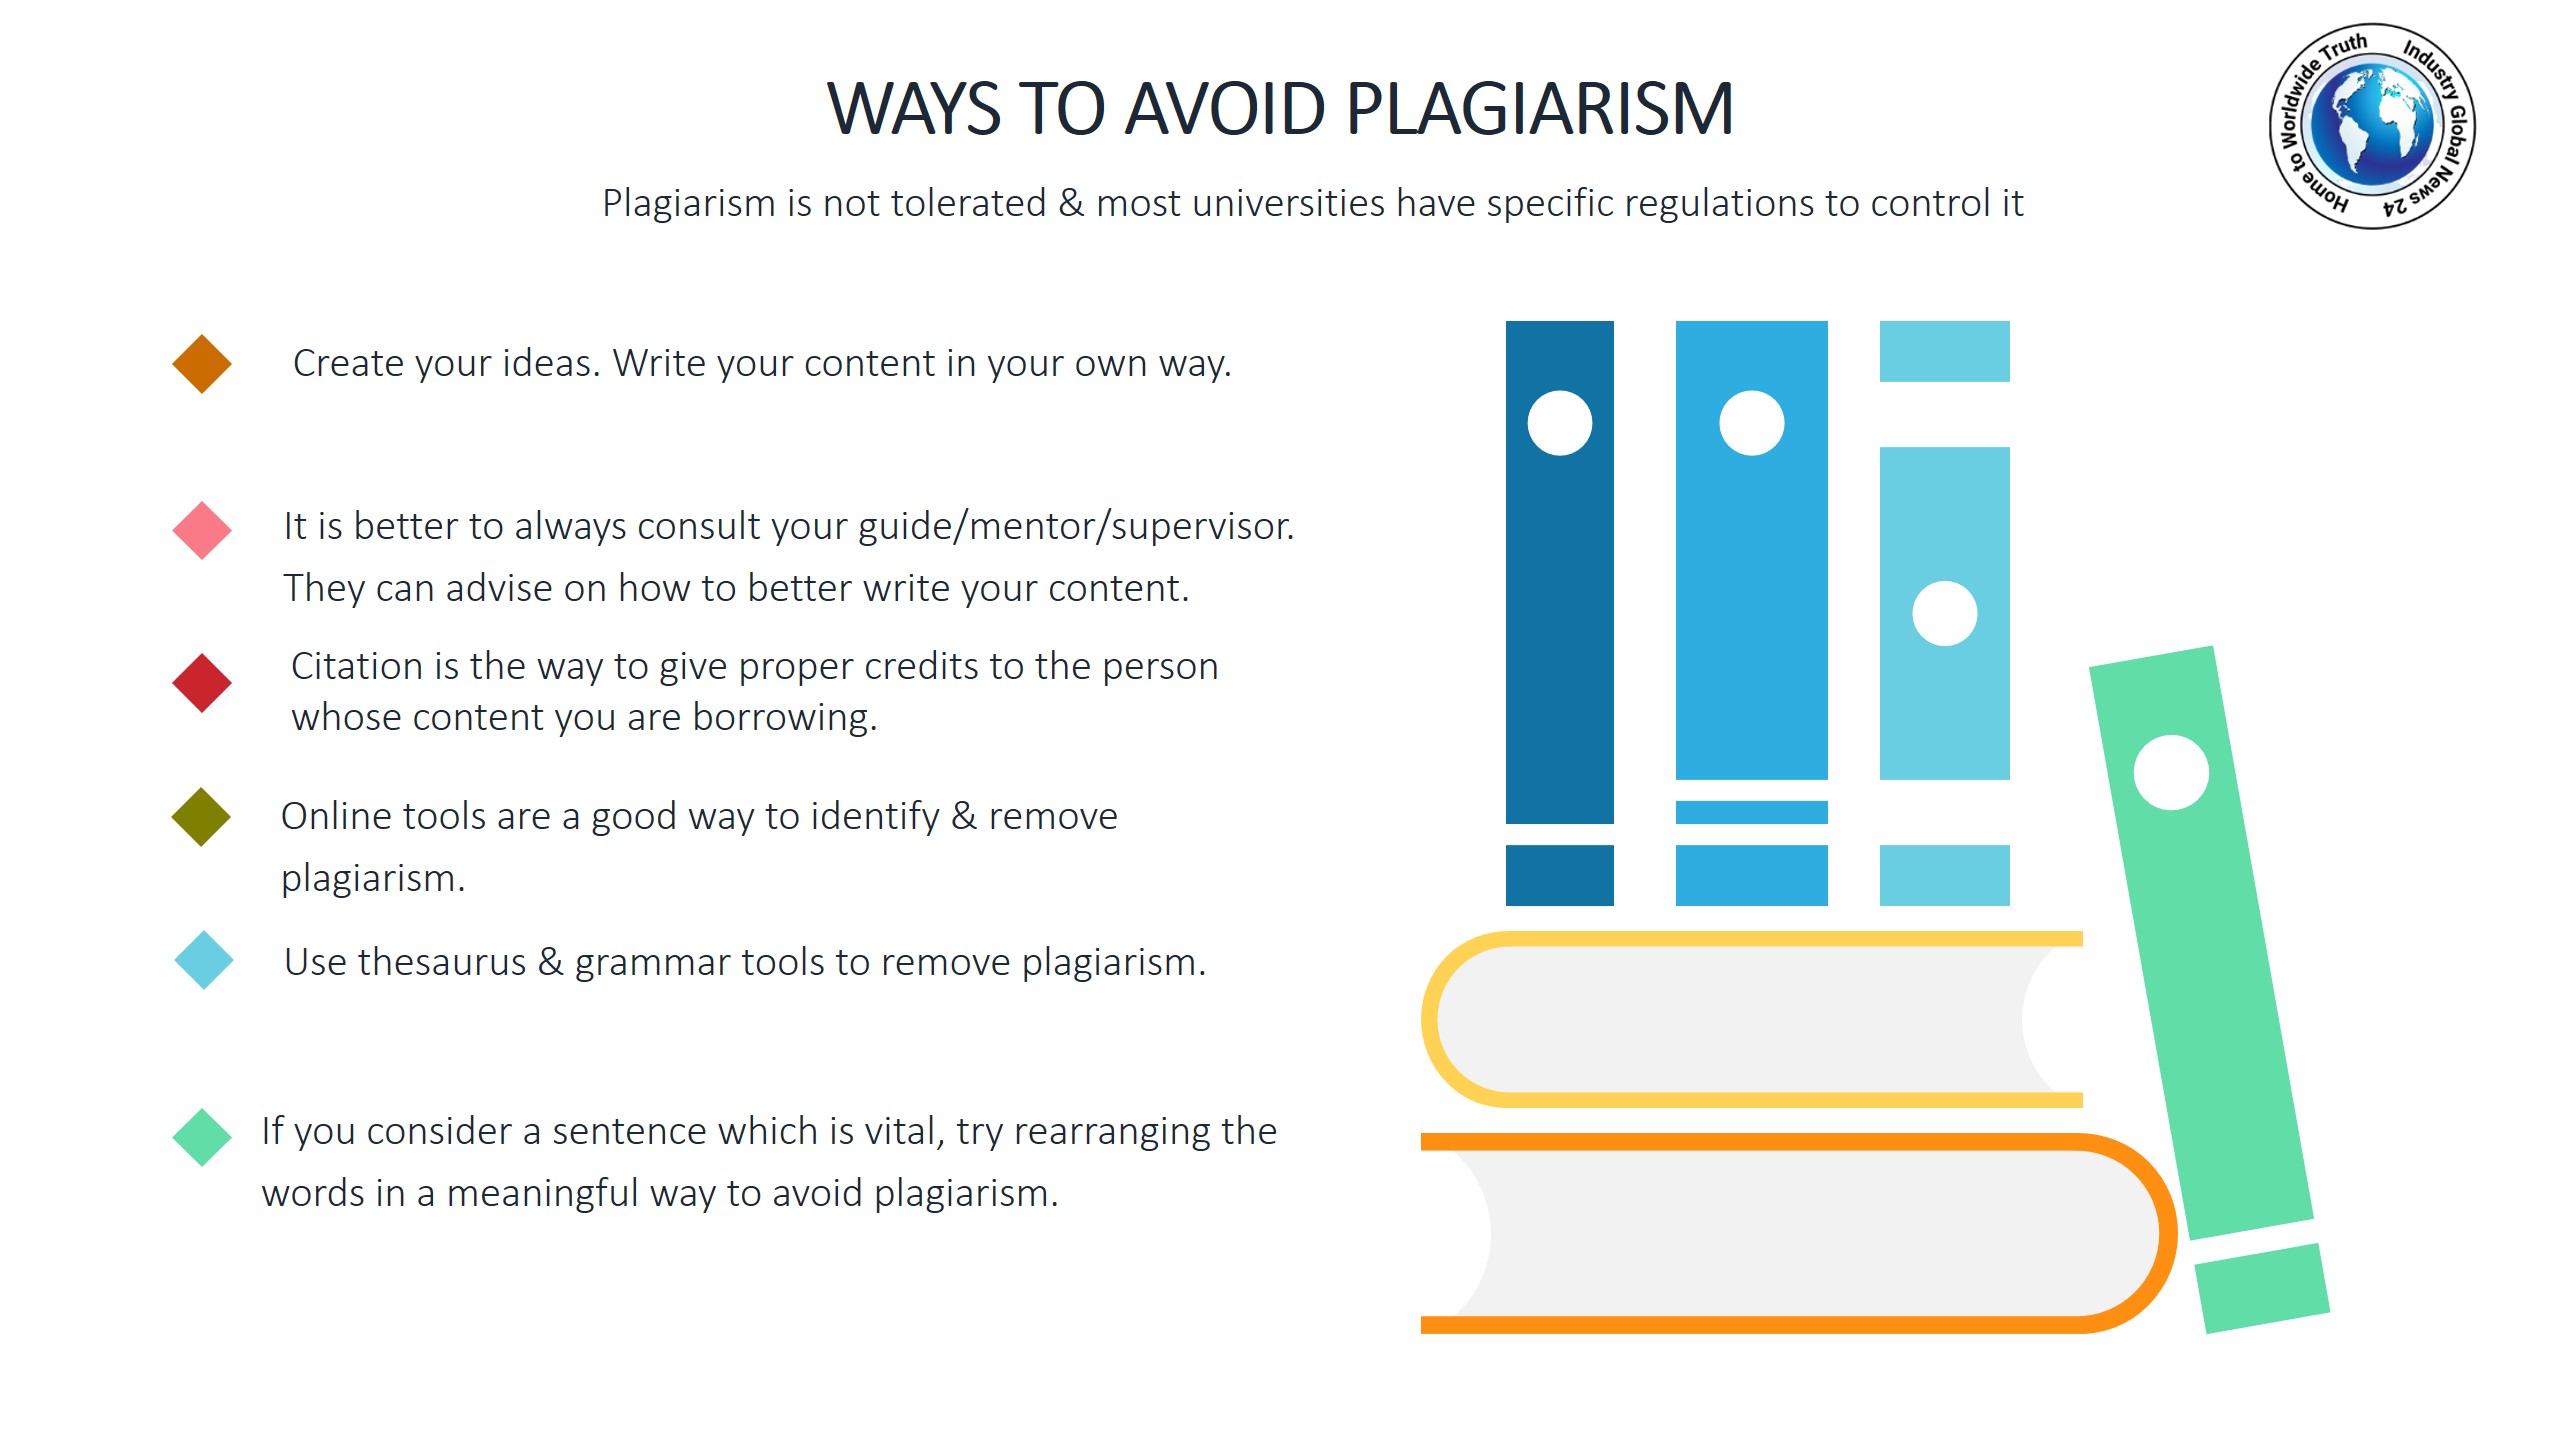 Ways to avoid plagiarism